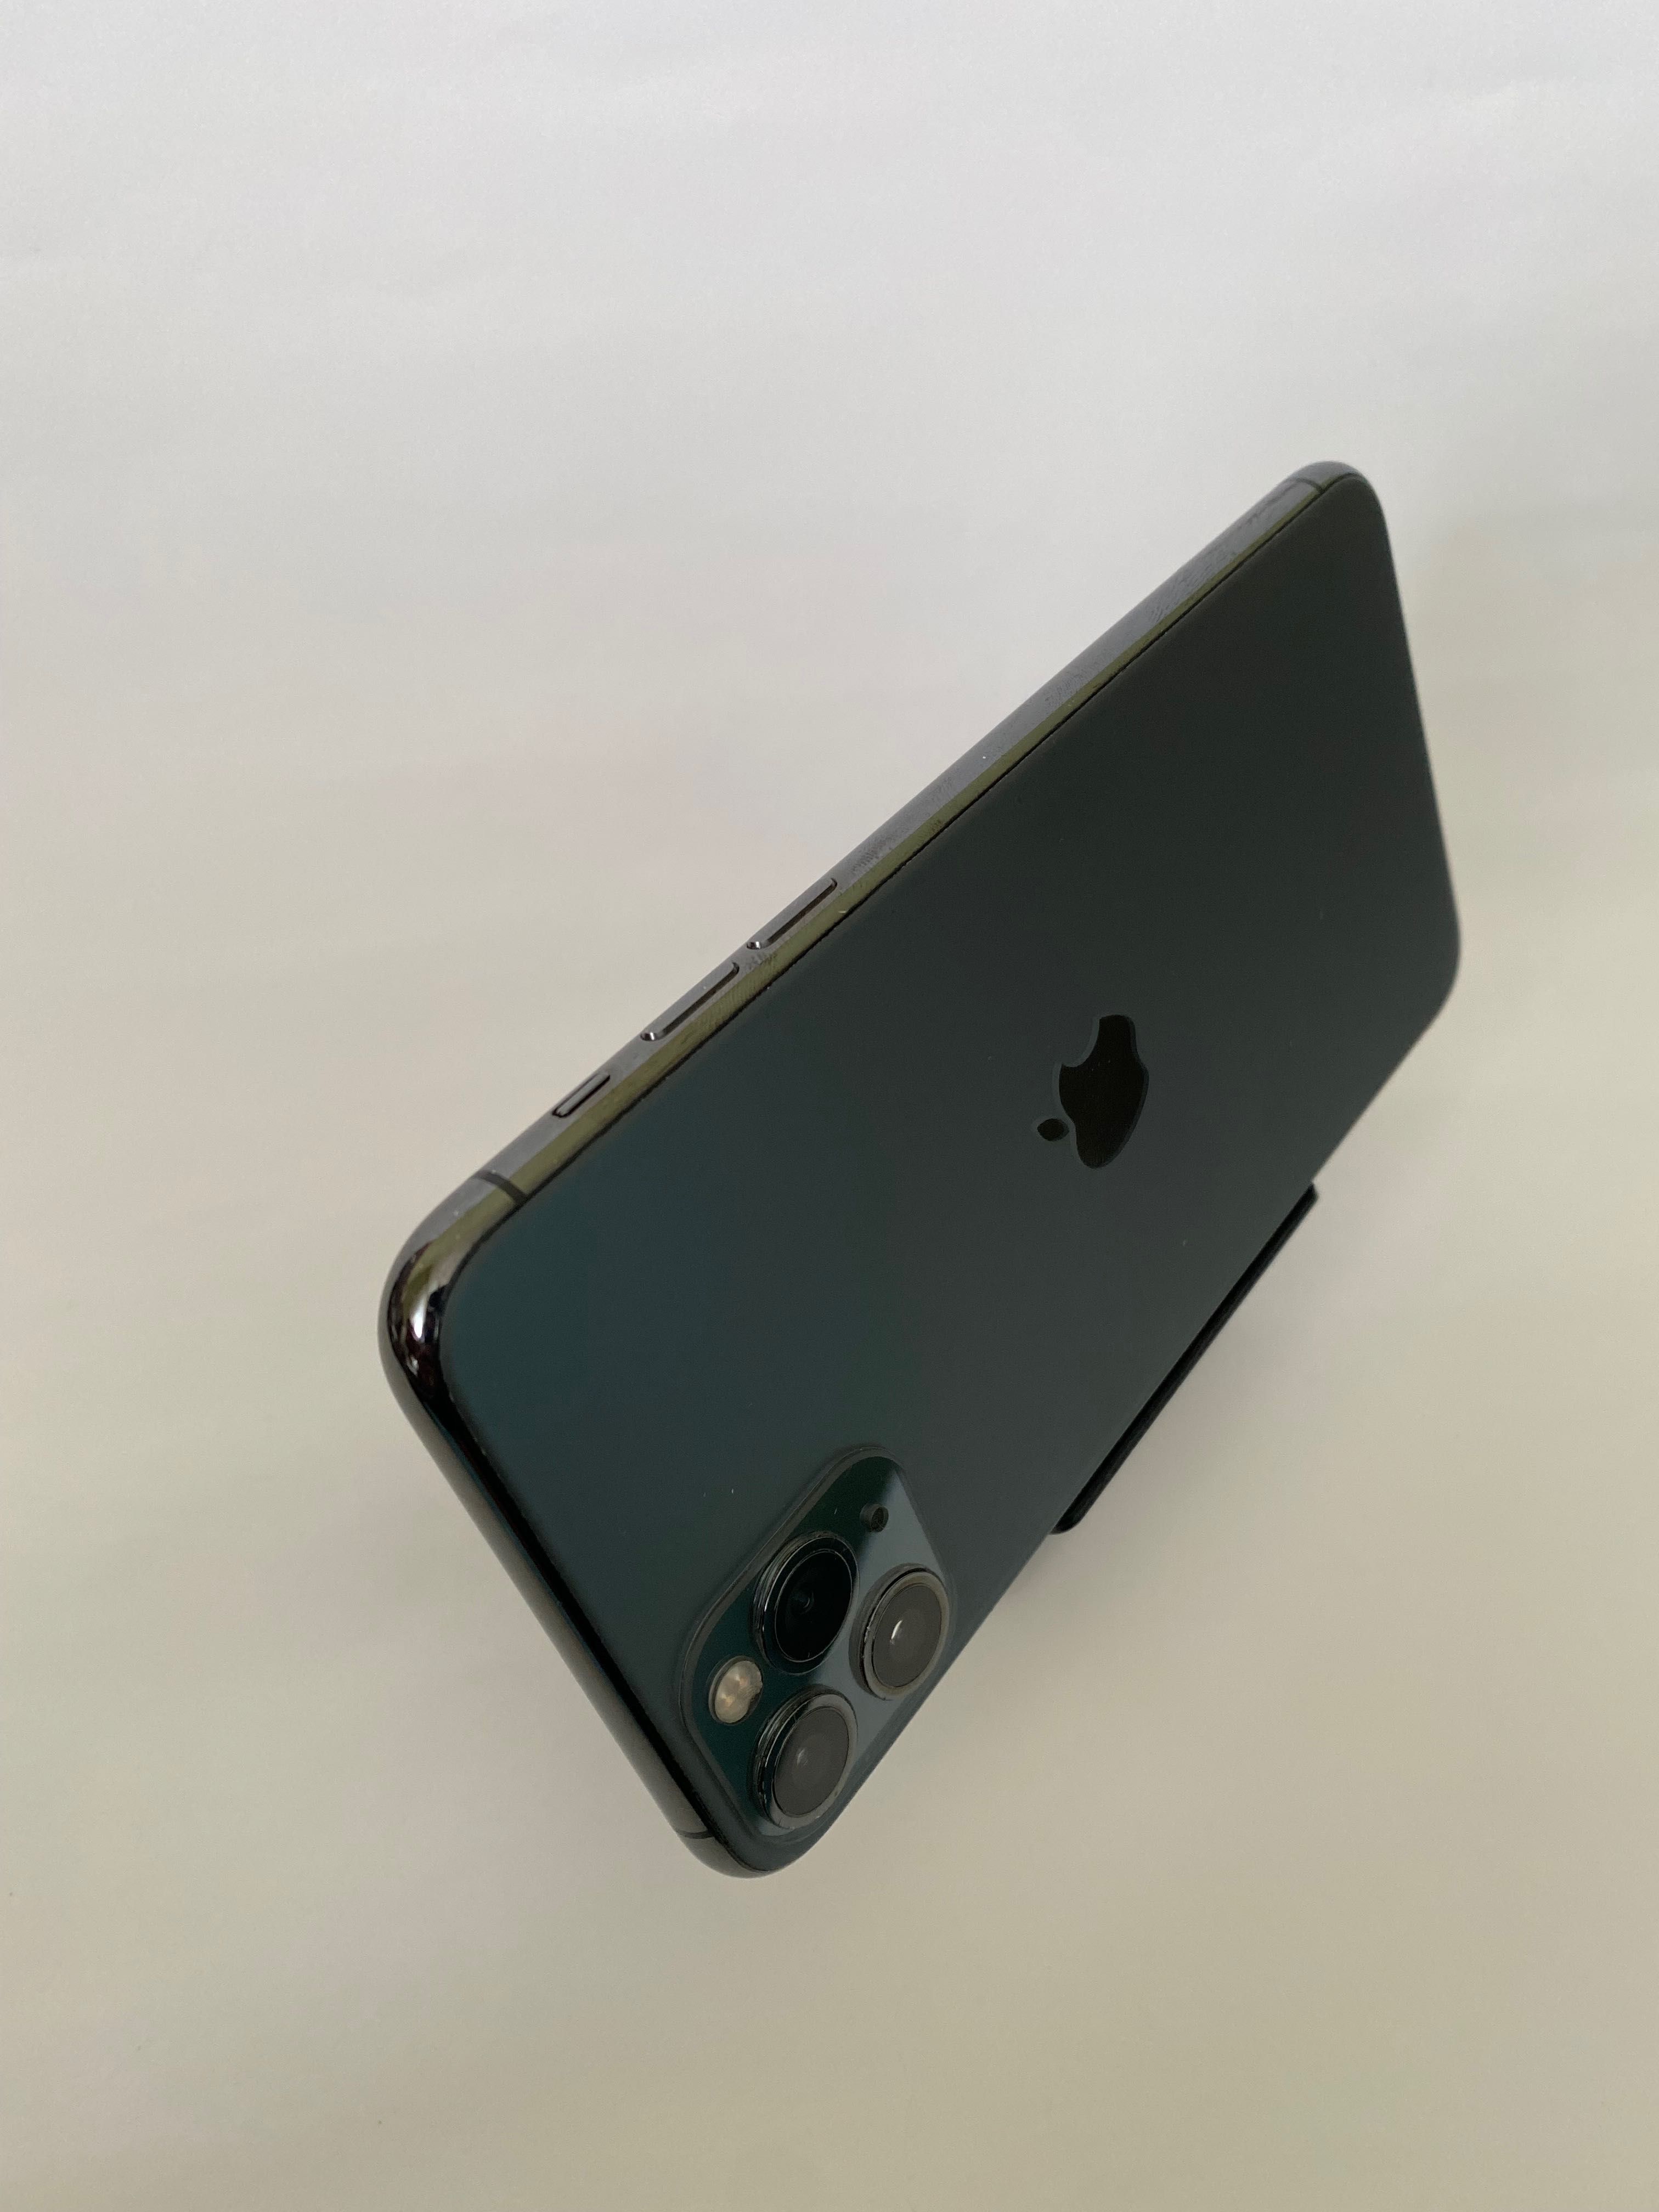 iPhone 11 Pro Max, 64gb neverlock